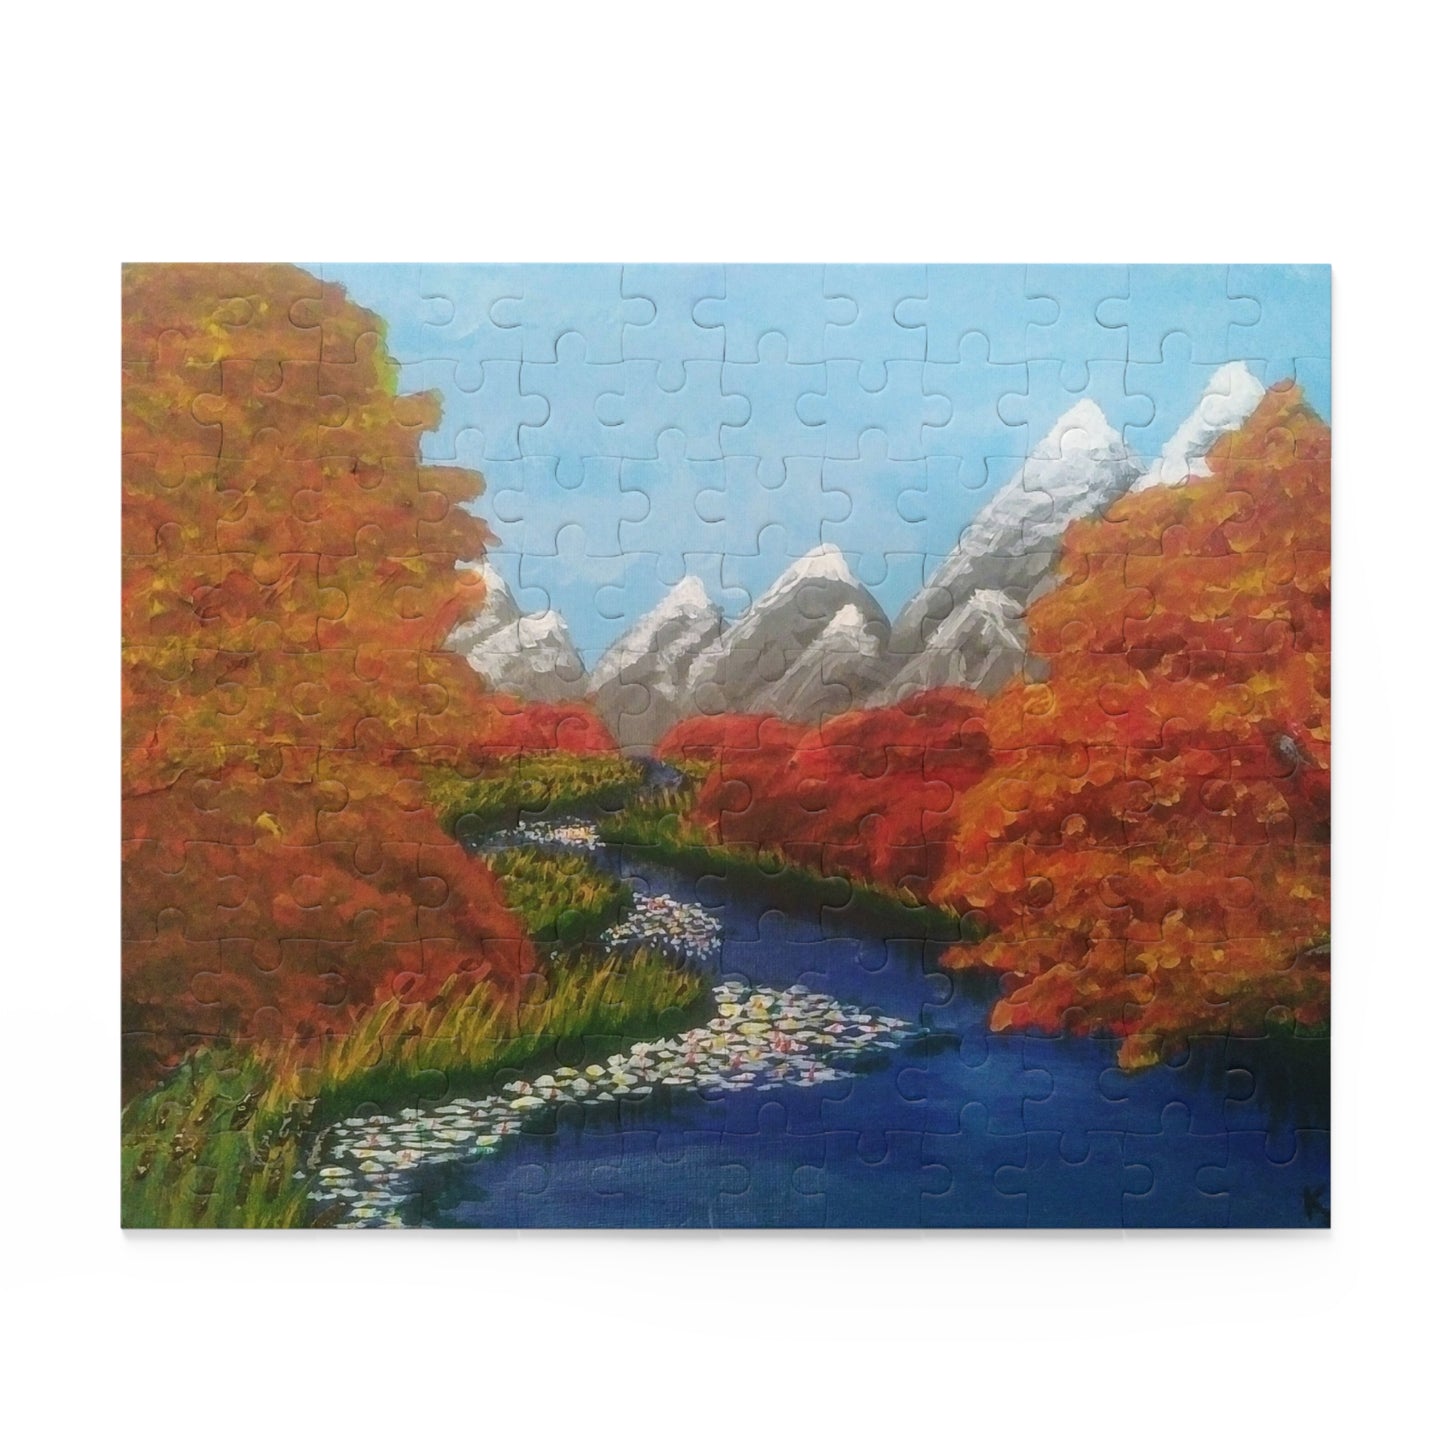 "Autumn River" Puzzle